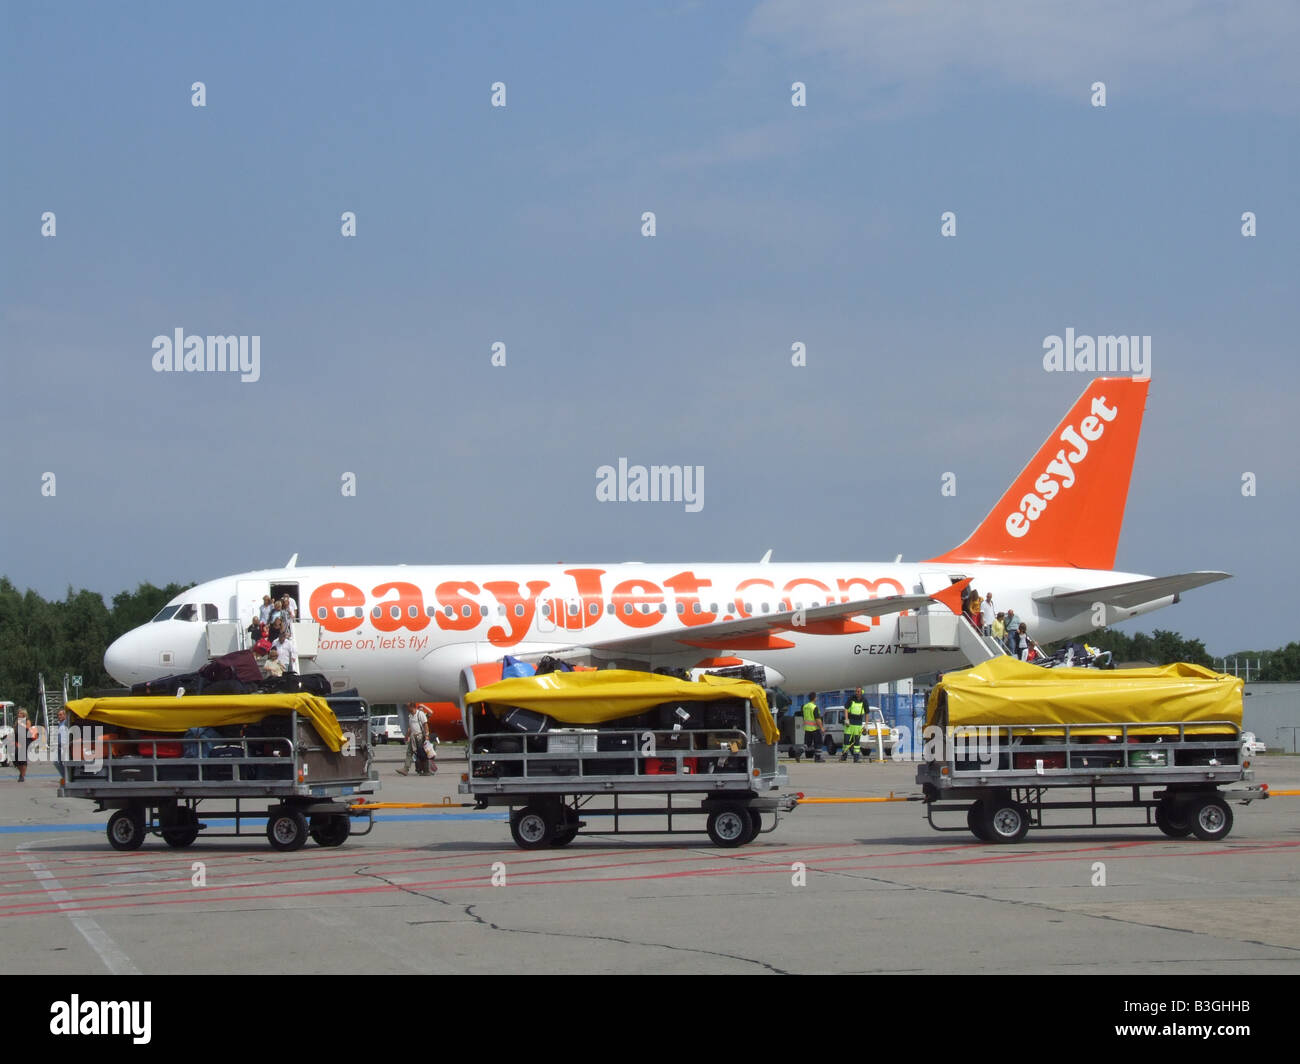 detail of easy jet plane on airport tarmac Stock Photo